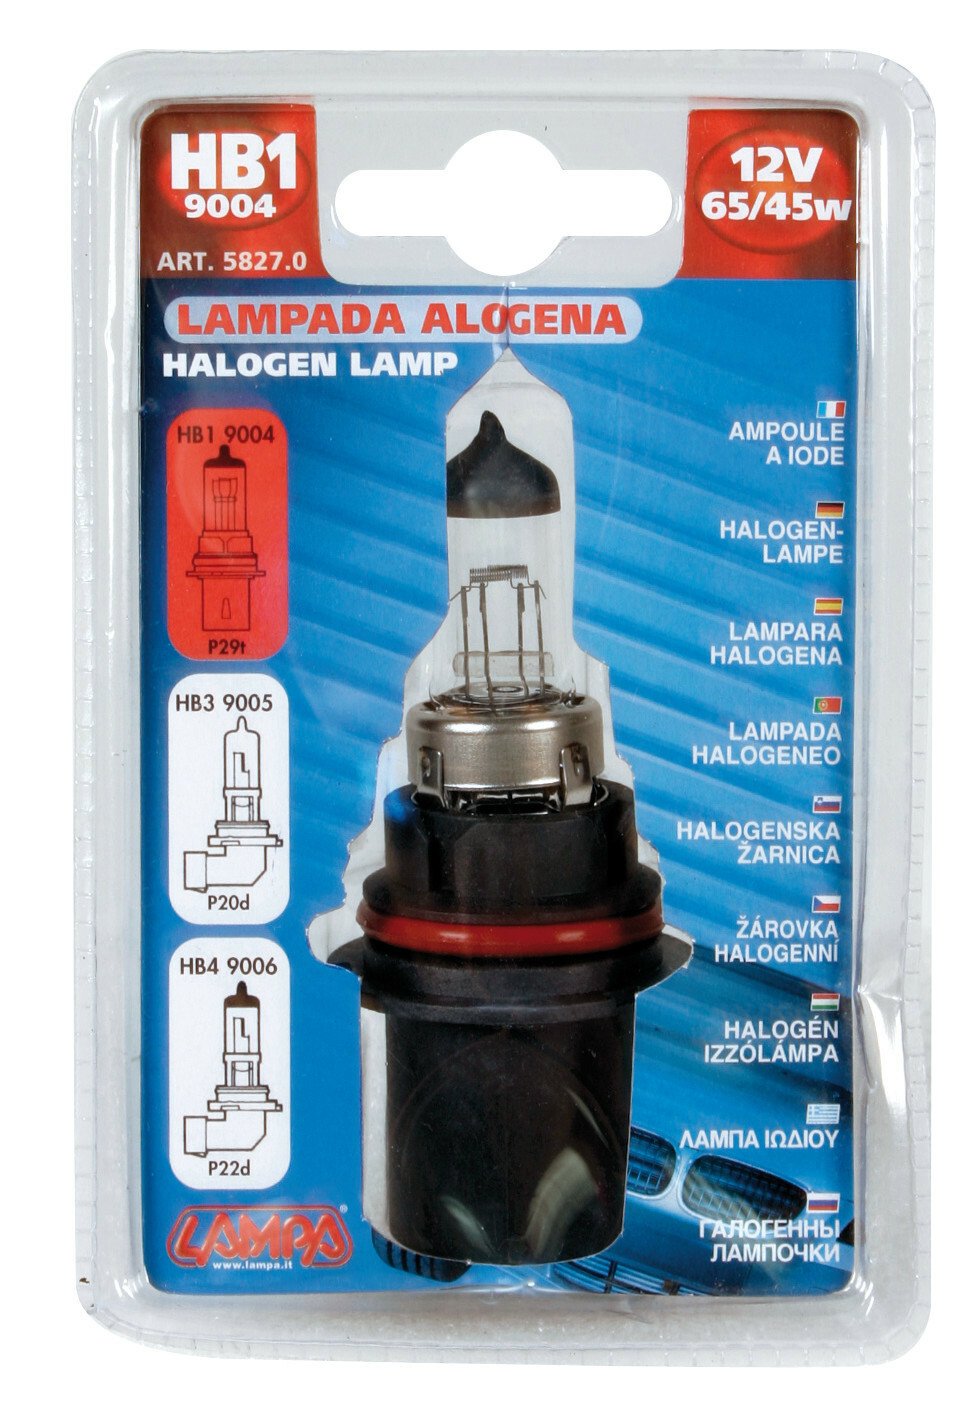 Bec halogen 12V - HB1 9004 - 65/45W - P29t 1buc Lampa thumb